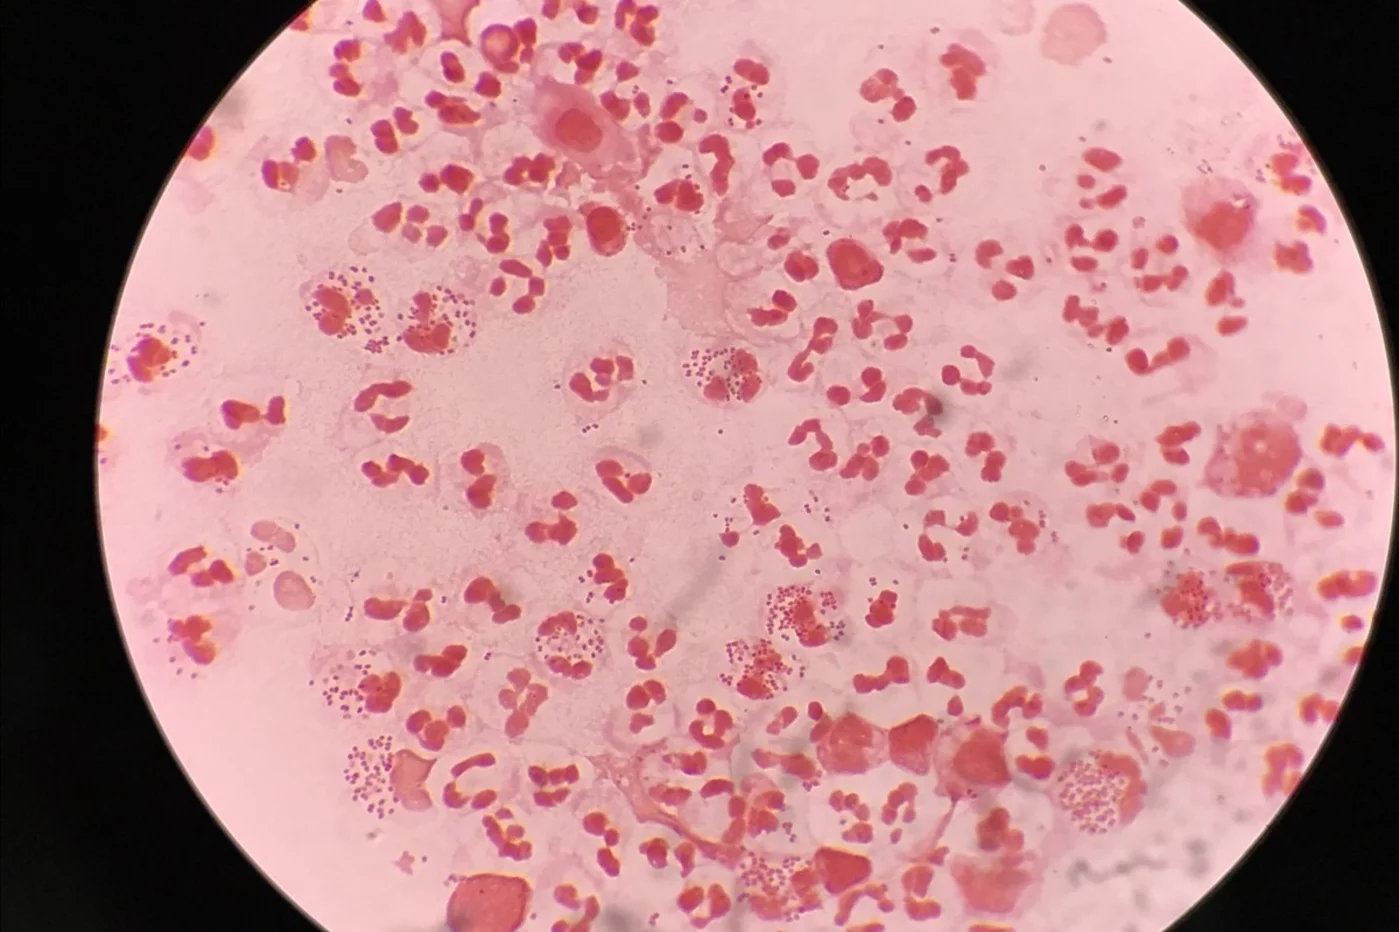 Una muestra de gonorrea vista al microscopio. Foto: SHUTTERSTOCK.